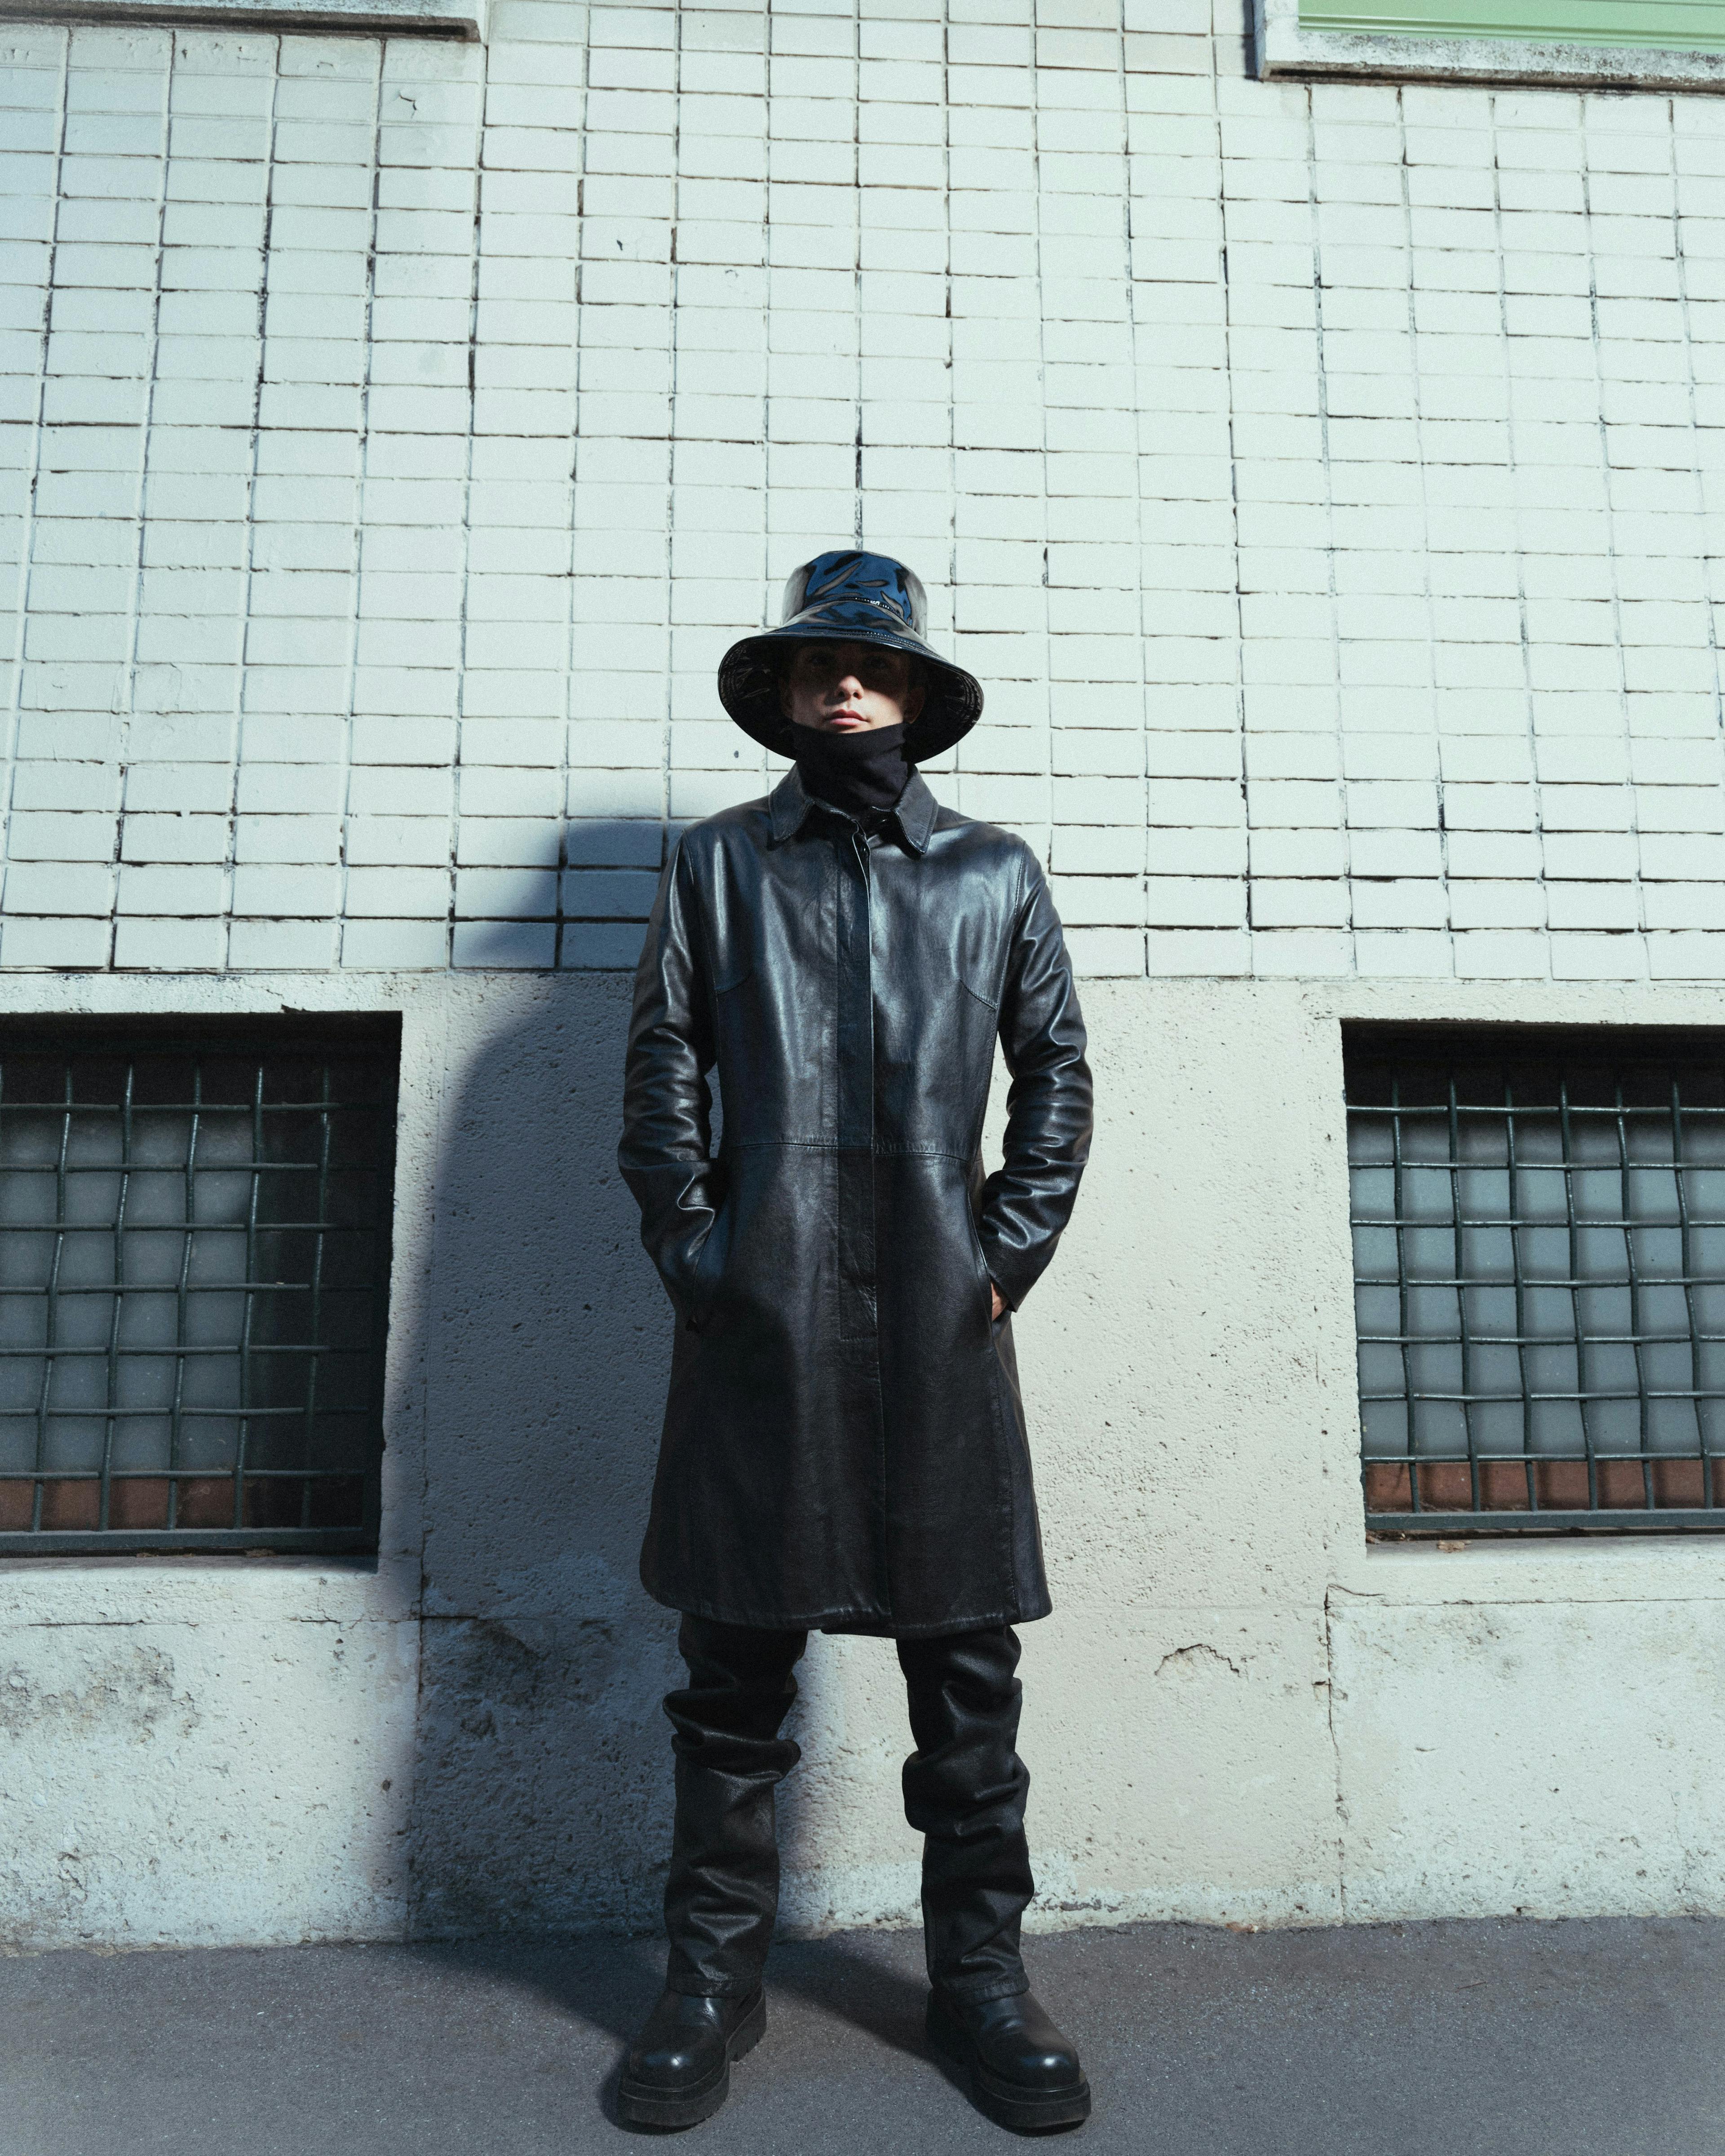 clothing apparel overcoat coat hat person human wall